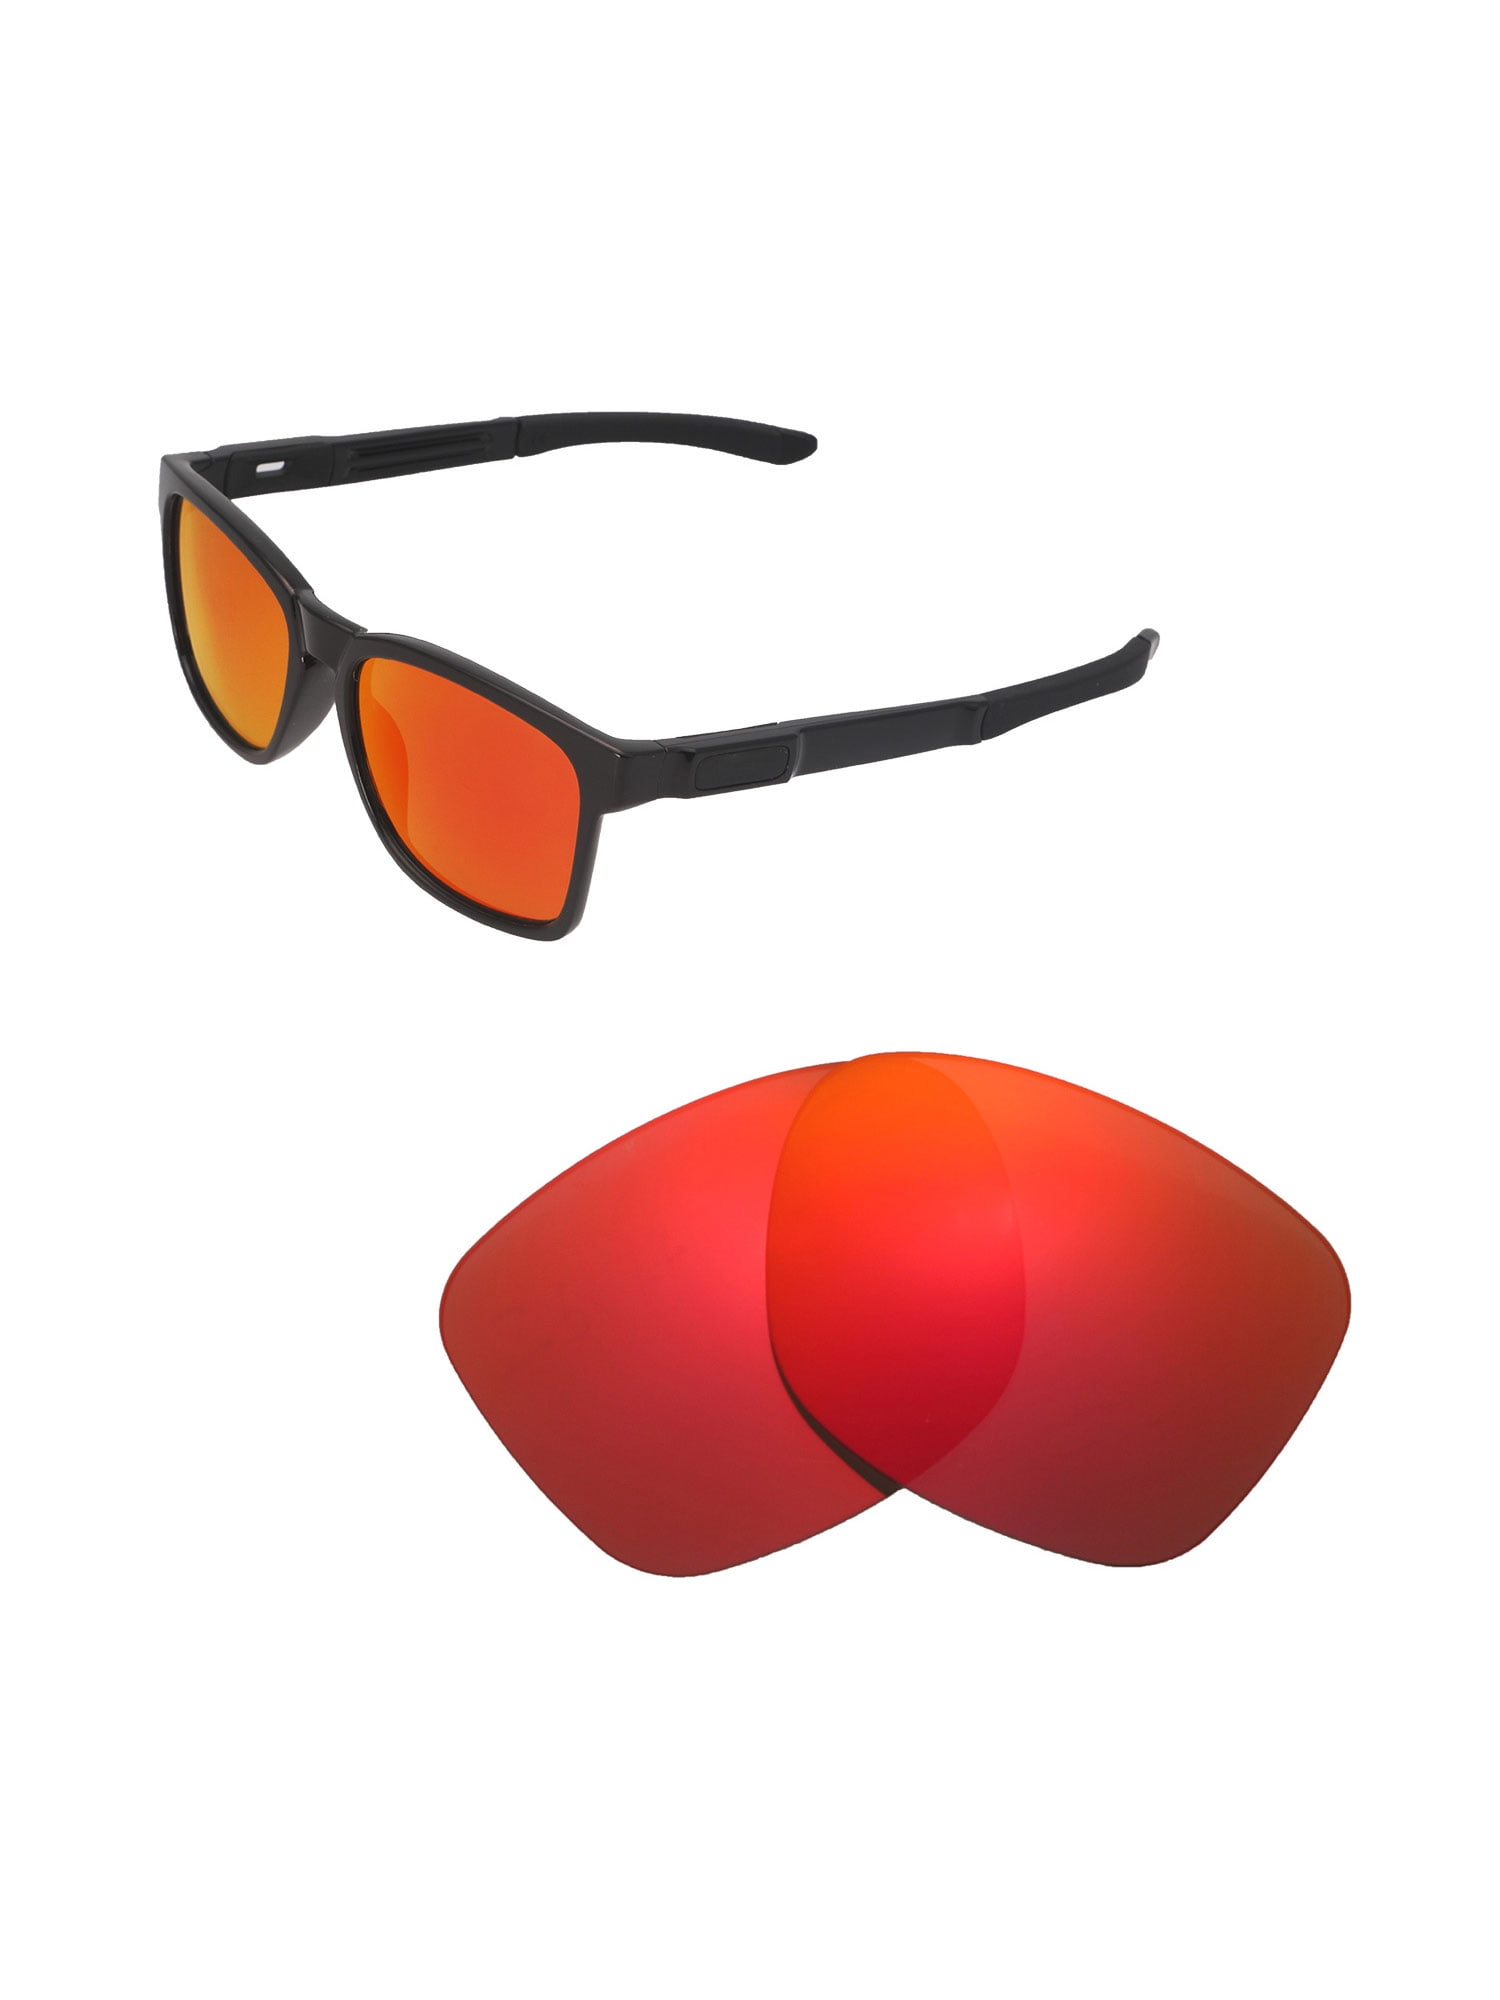 Walleva Black Polarized Replacement Lenses for Oakley Catalyst Sunglasses -  